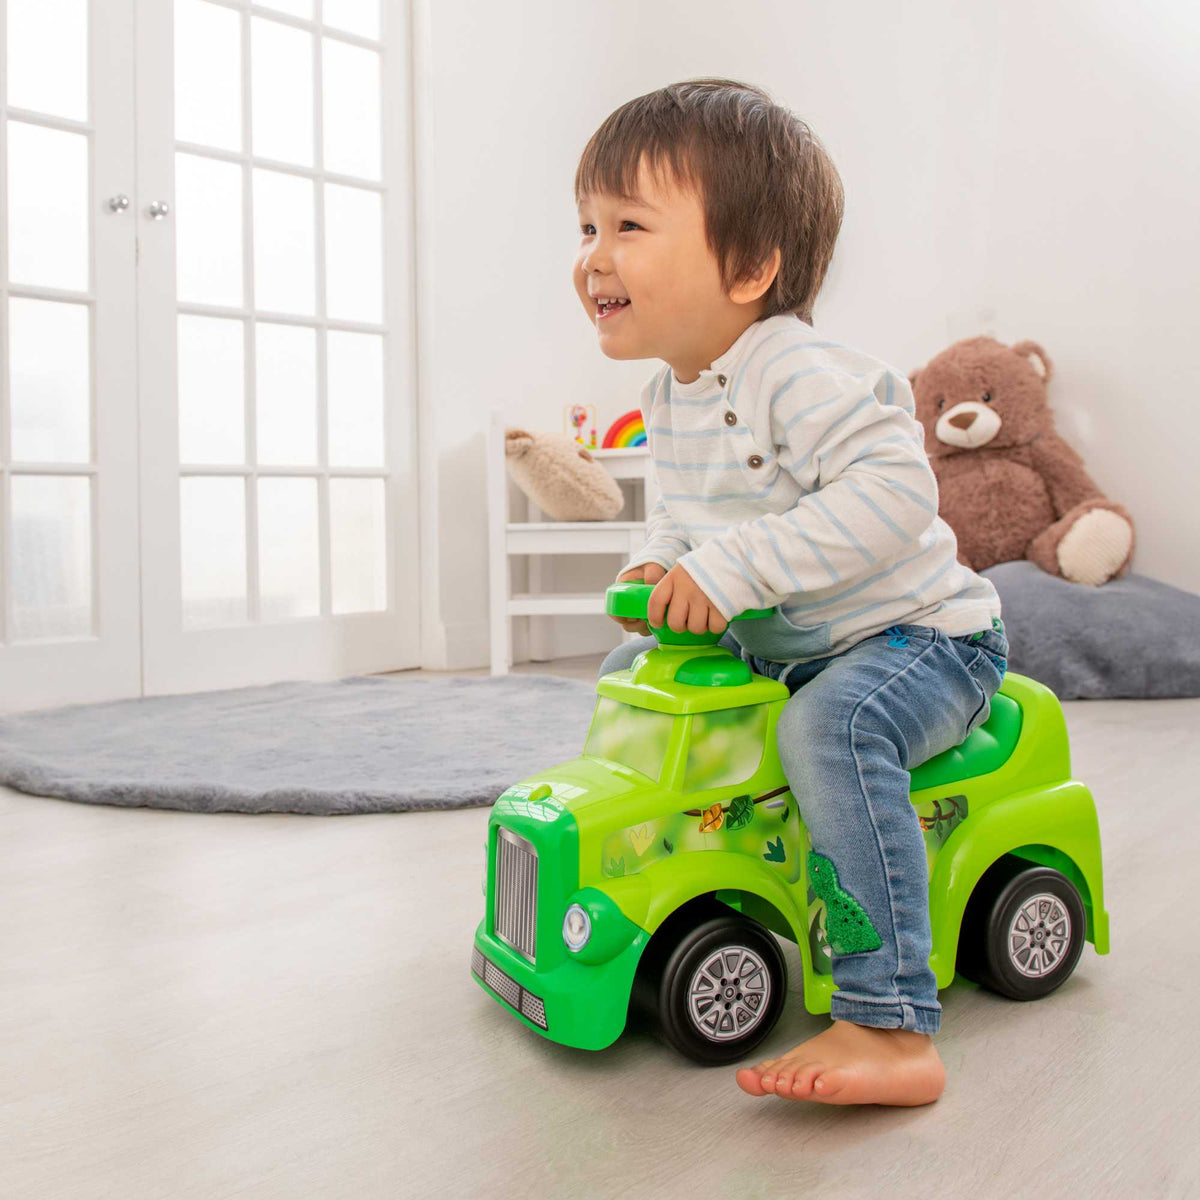 Foot-To-Floor Ride-On, Dinosaur Toys, Toddler Scooter, Toddler Ride-On, Push Toys, Walking Toys